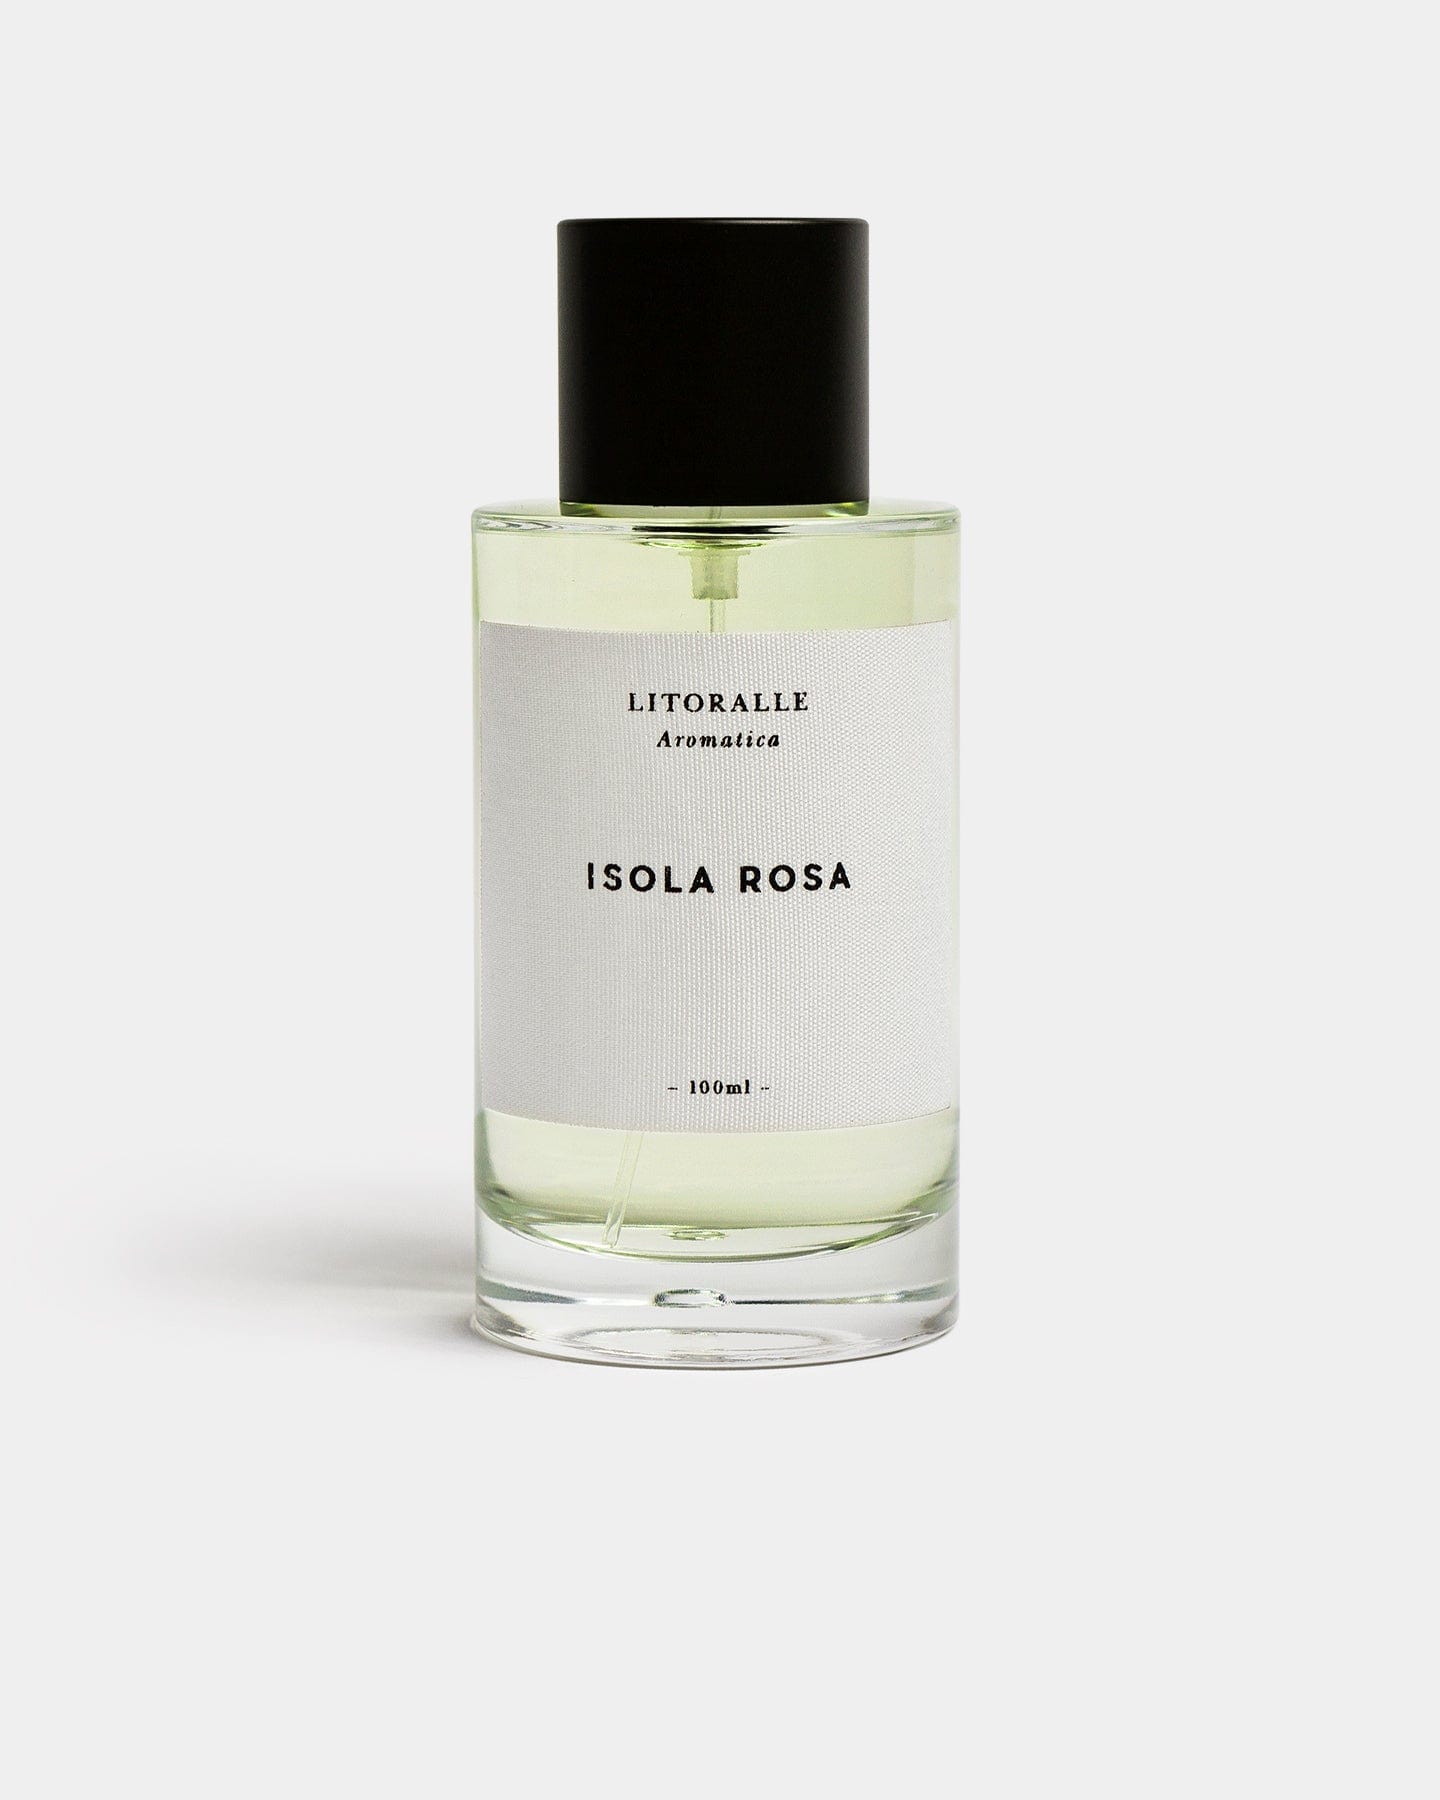 Litoralle Aromatica perfume 100ml Isola Rosa sunja link - canada